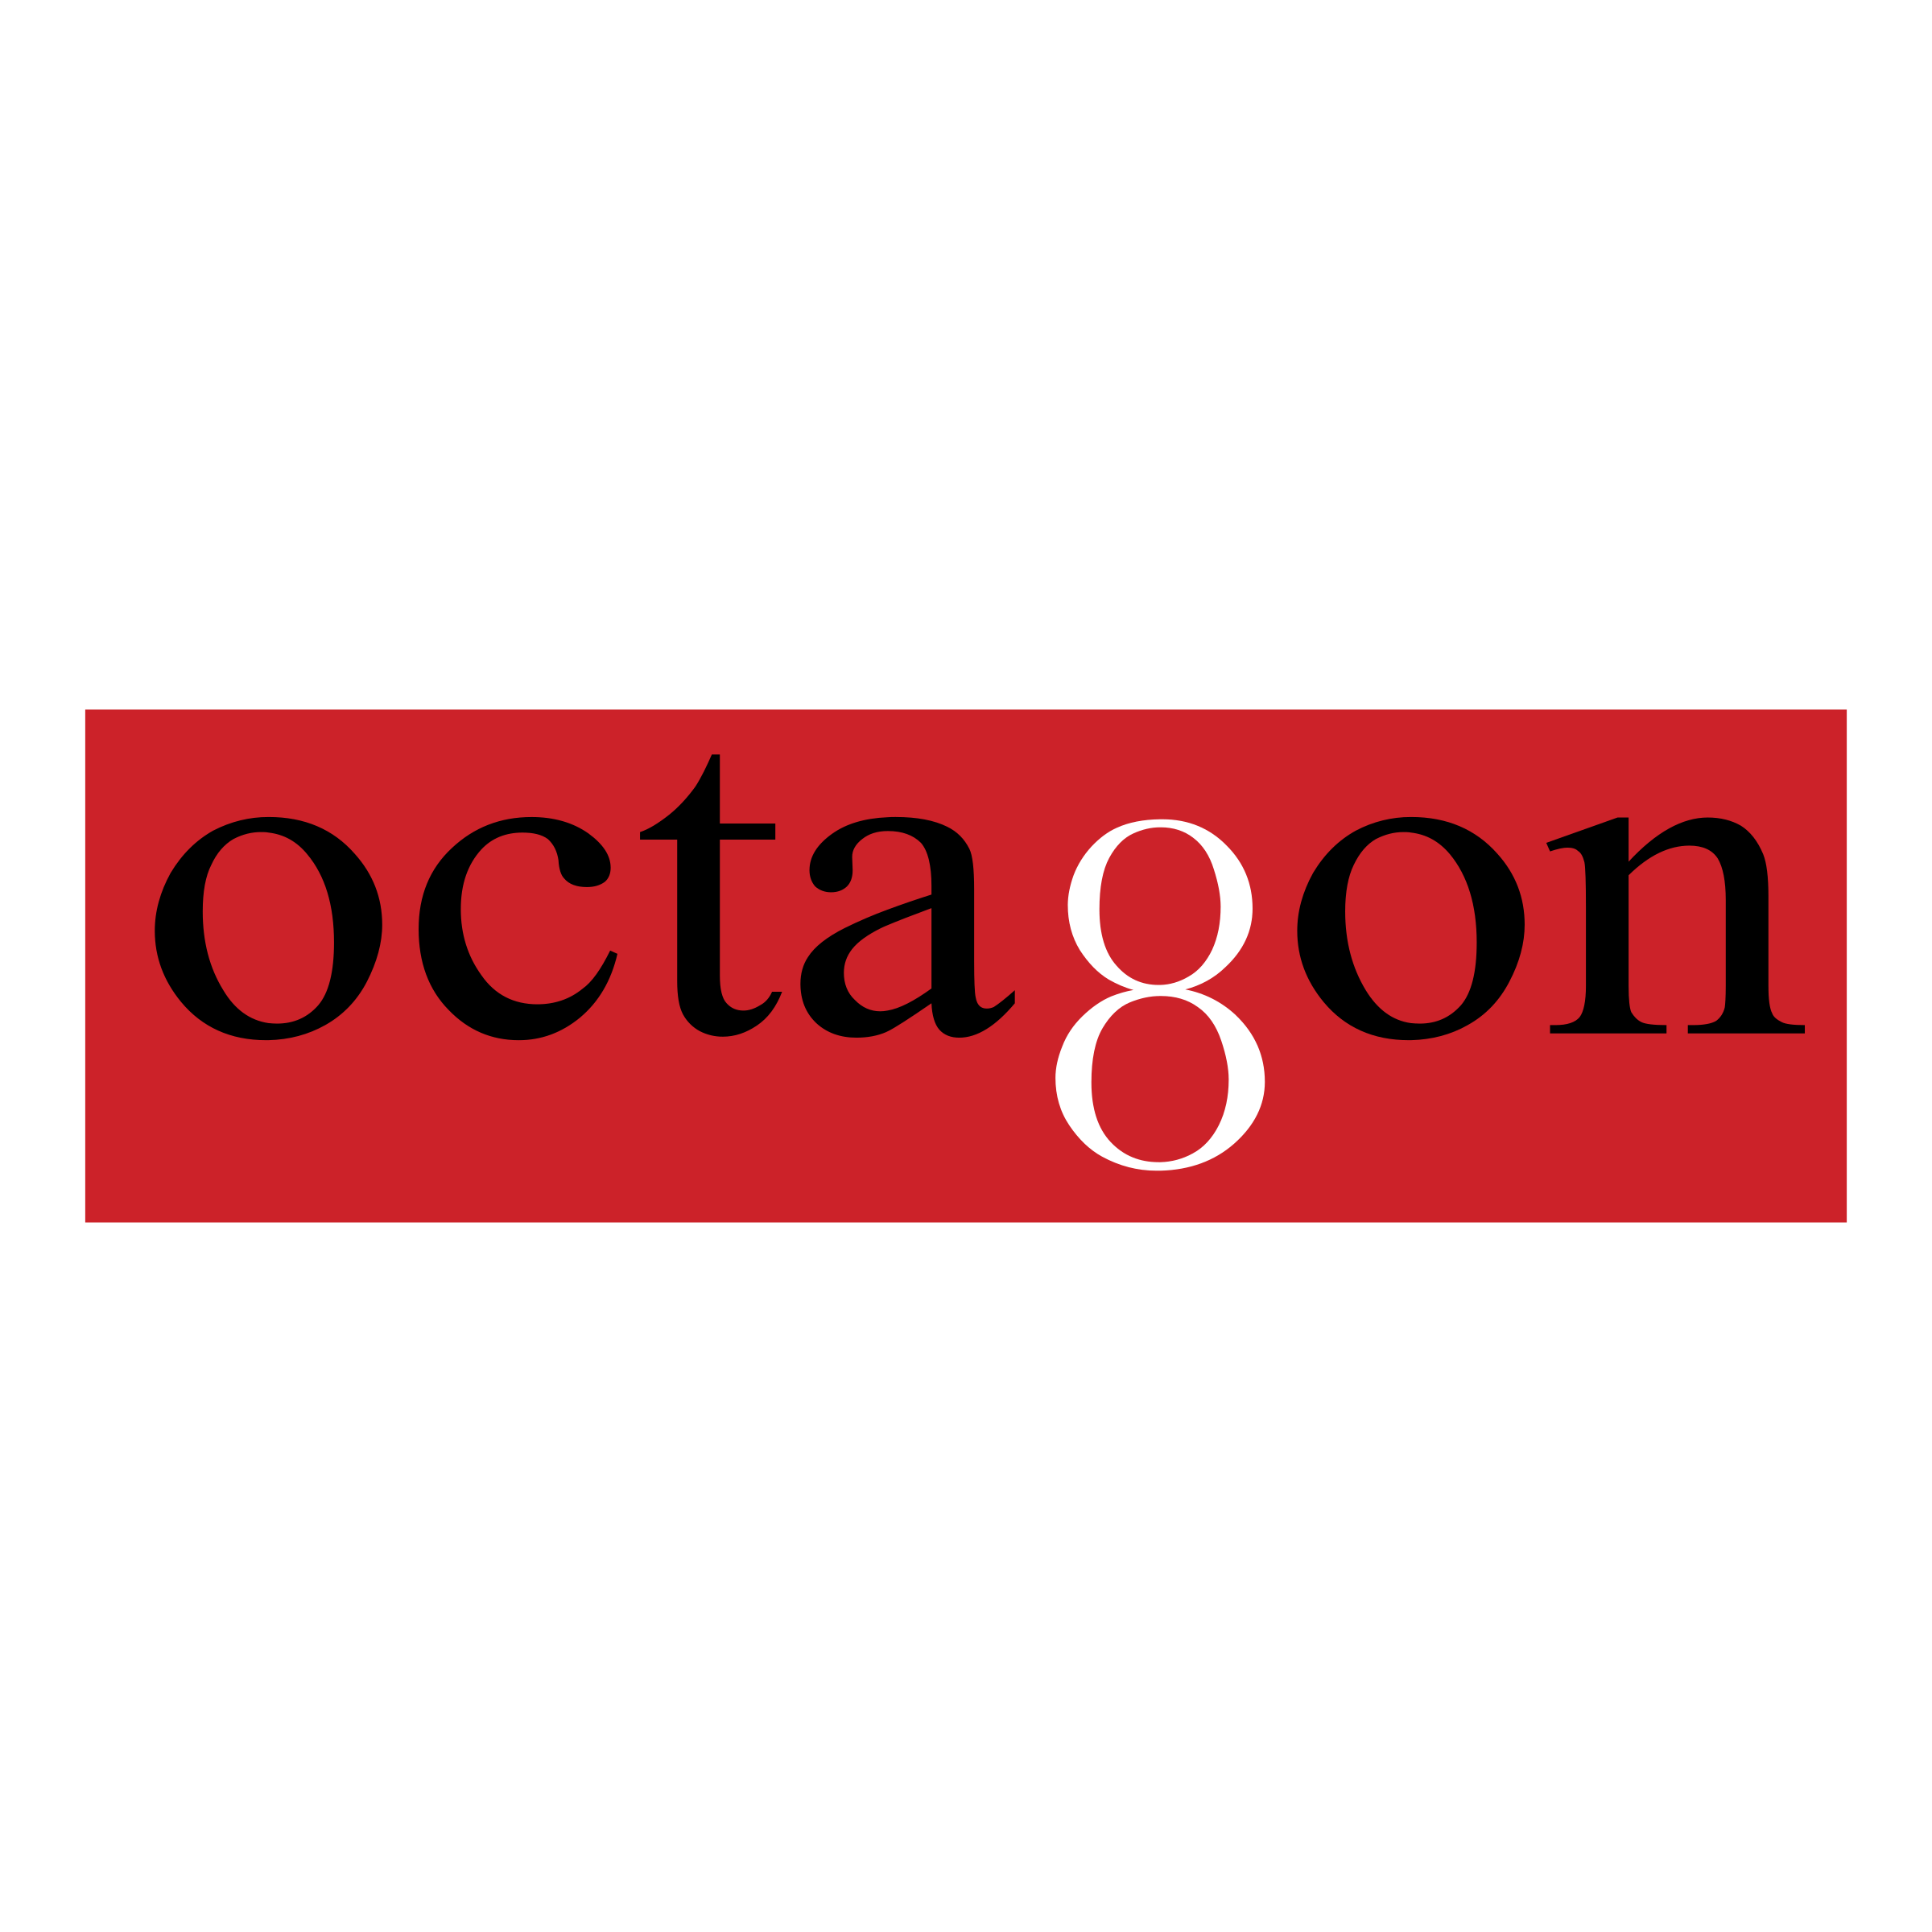 Octagon Logo - Octagon Logo PNG Transparent & SVG Vector - Freebie Supply